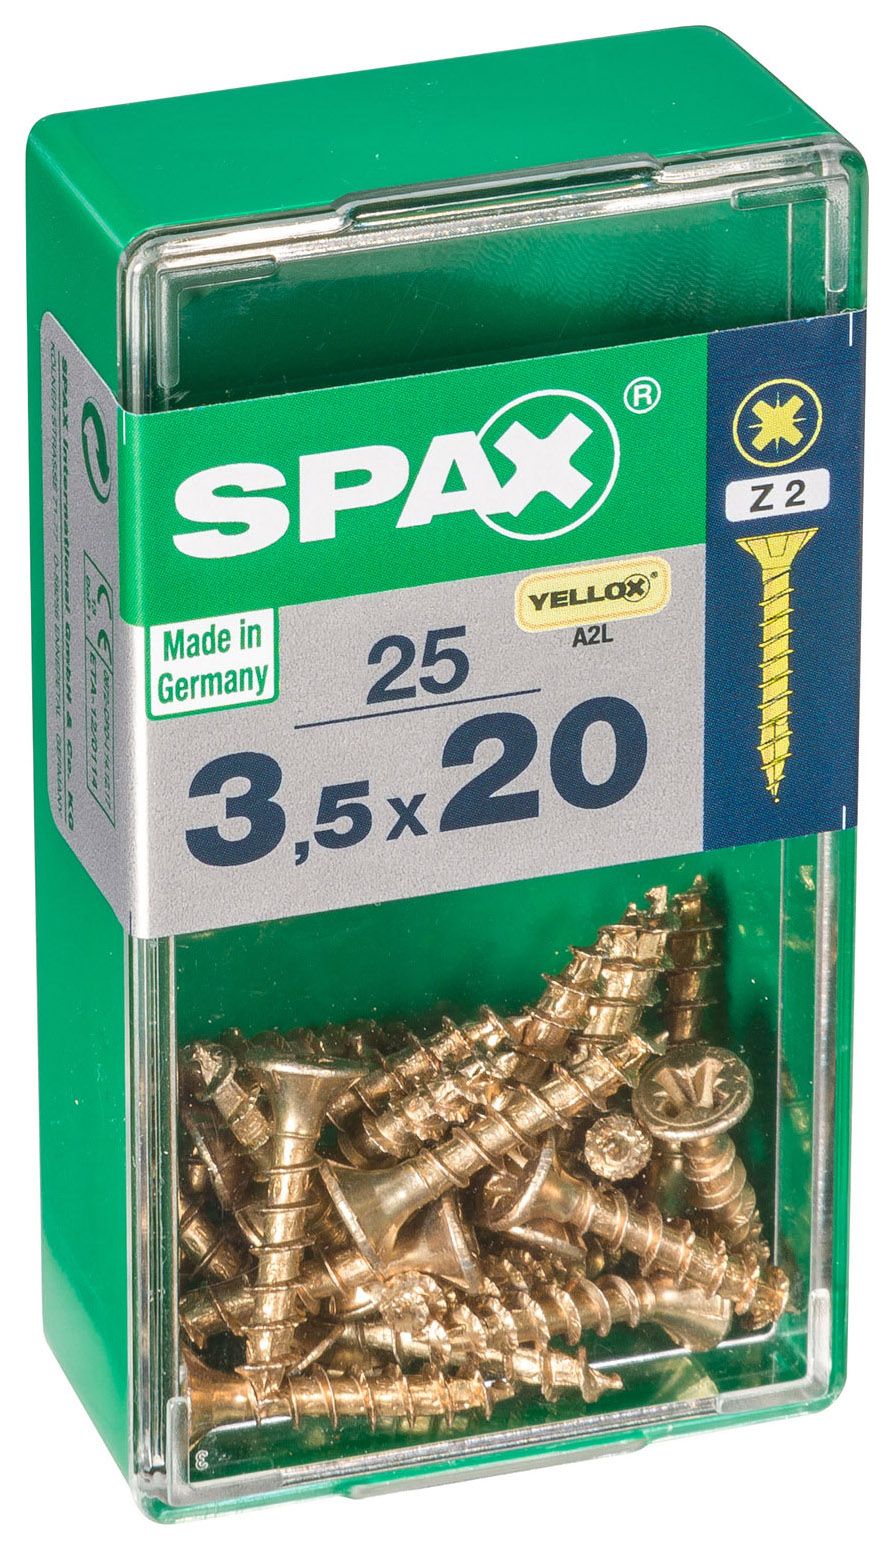 Spax PZ Countersunk Zinc Yellow Screws - 3.5 x 20mm Pack of 25